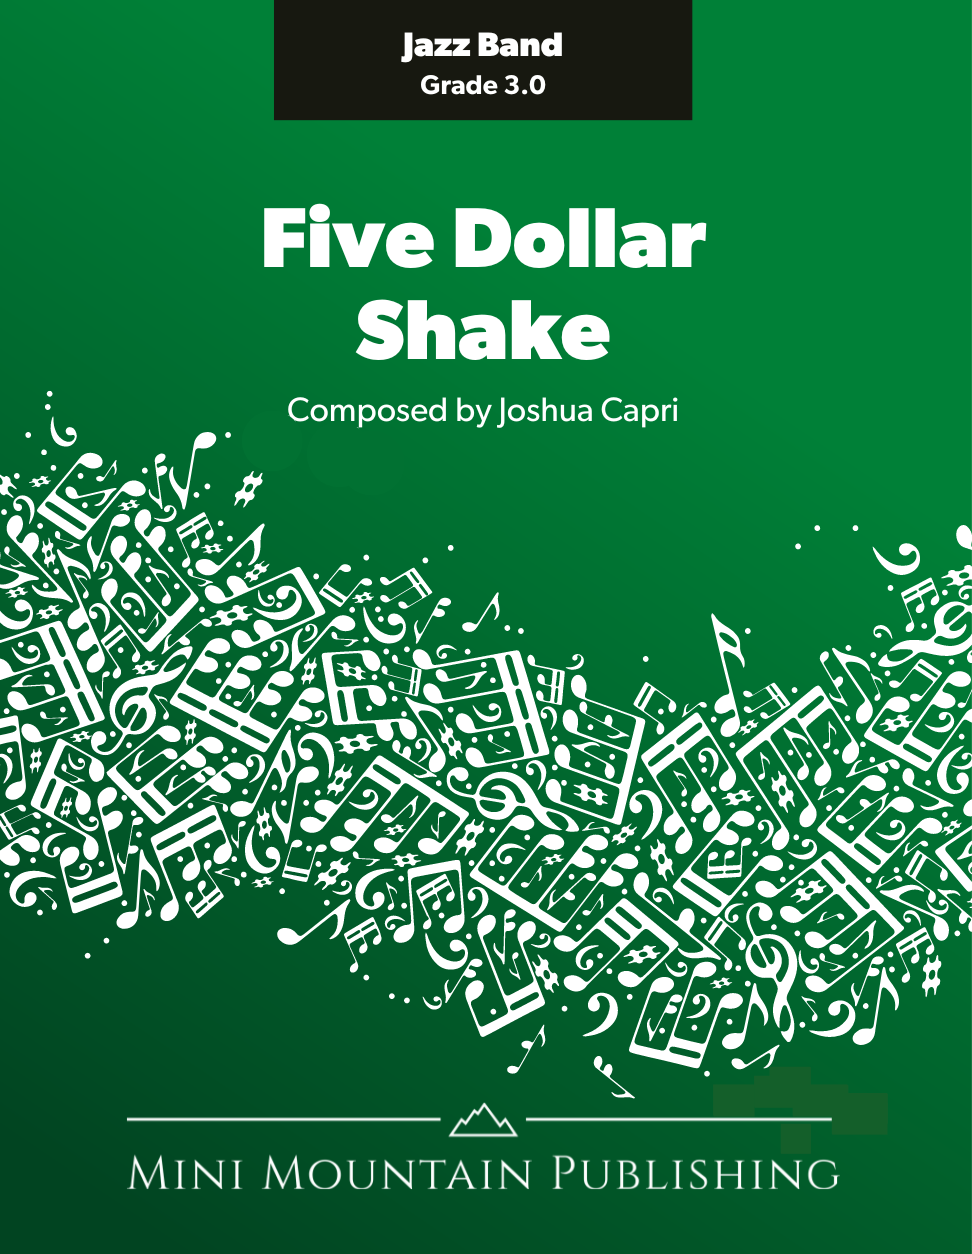 Five Dollar Shake - Physical Copy